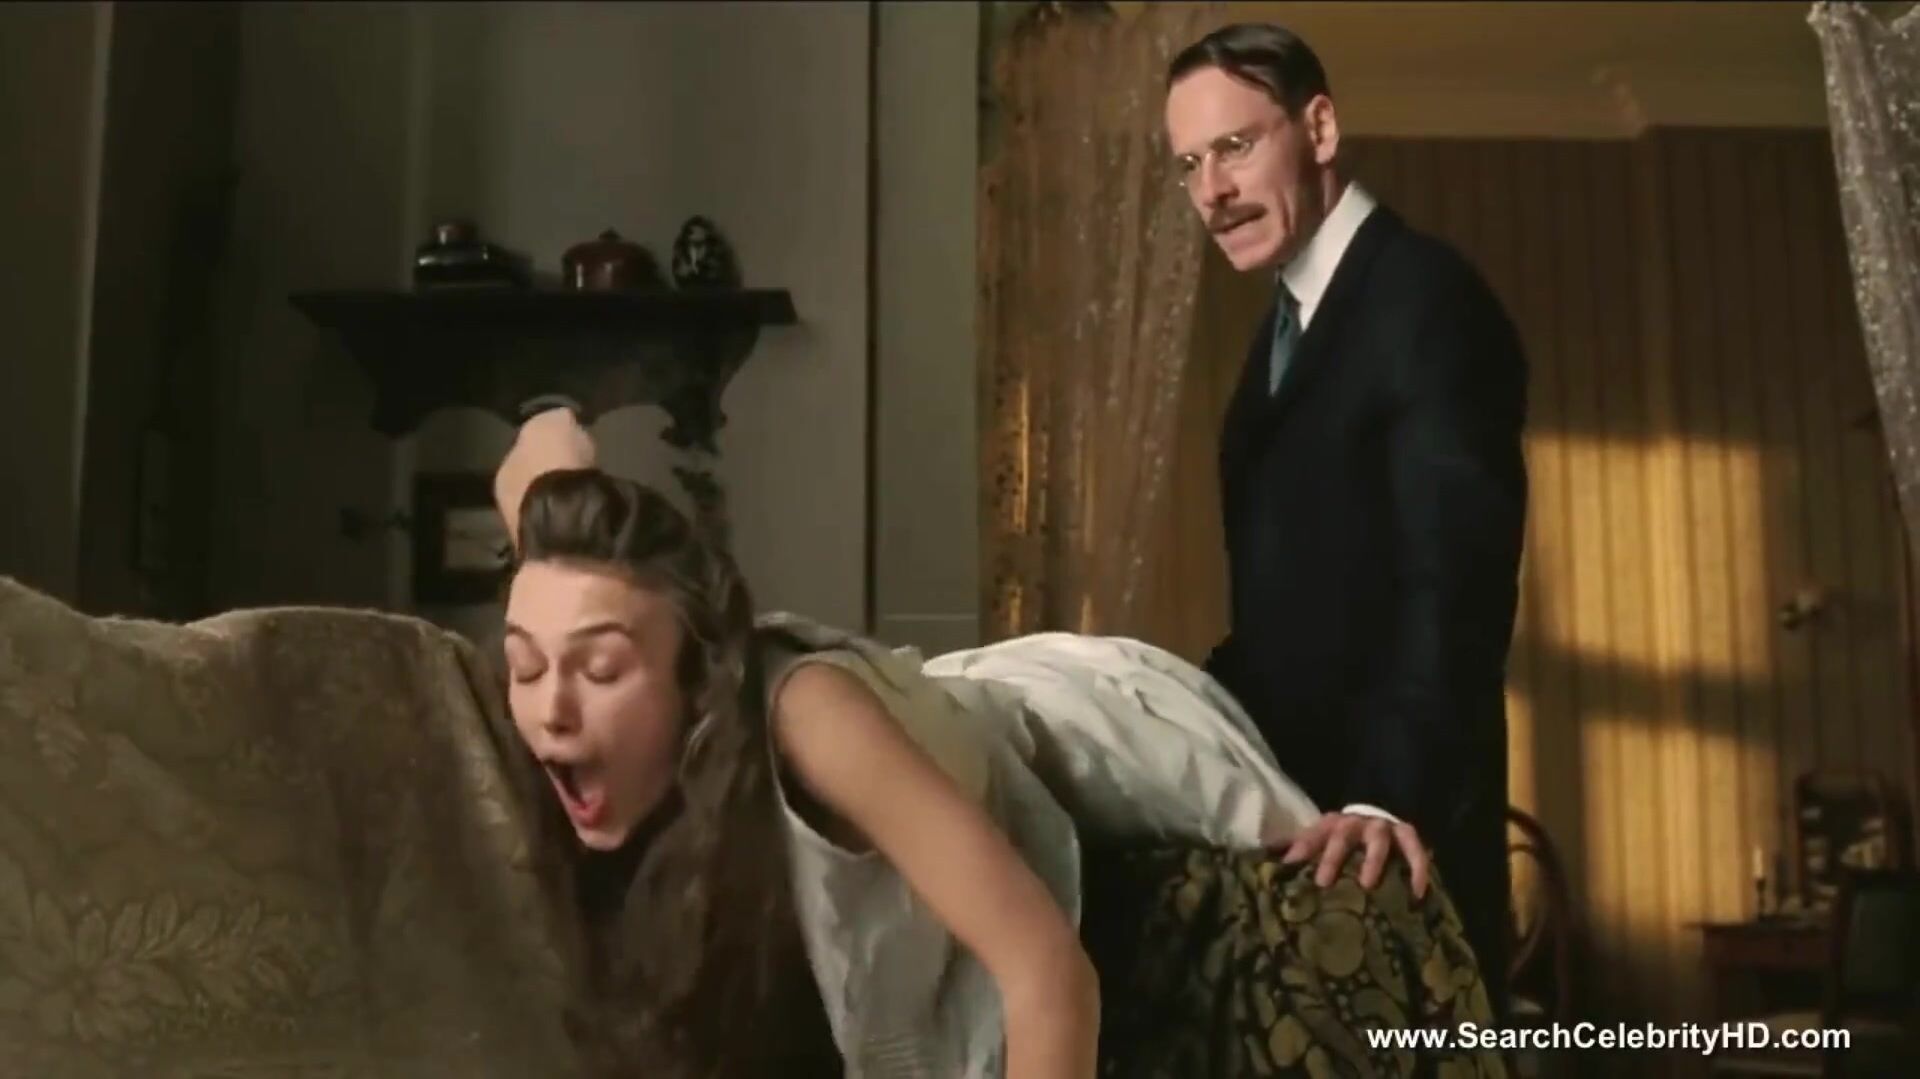 VideosZ Obscene charmers Keira Knightley and Kristen Stewart in explicit movies sex scenes AVRevenue